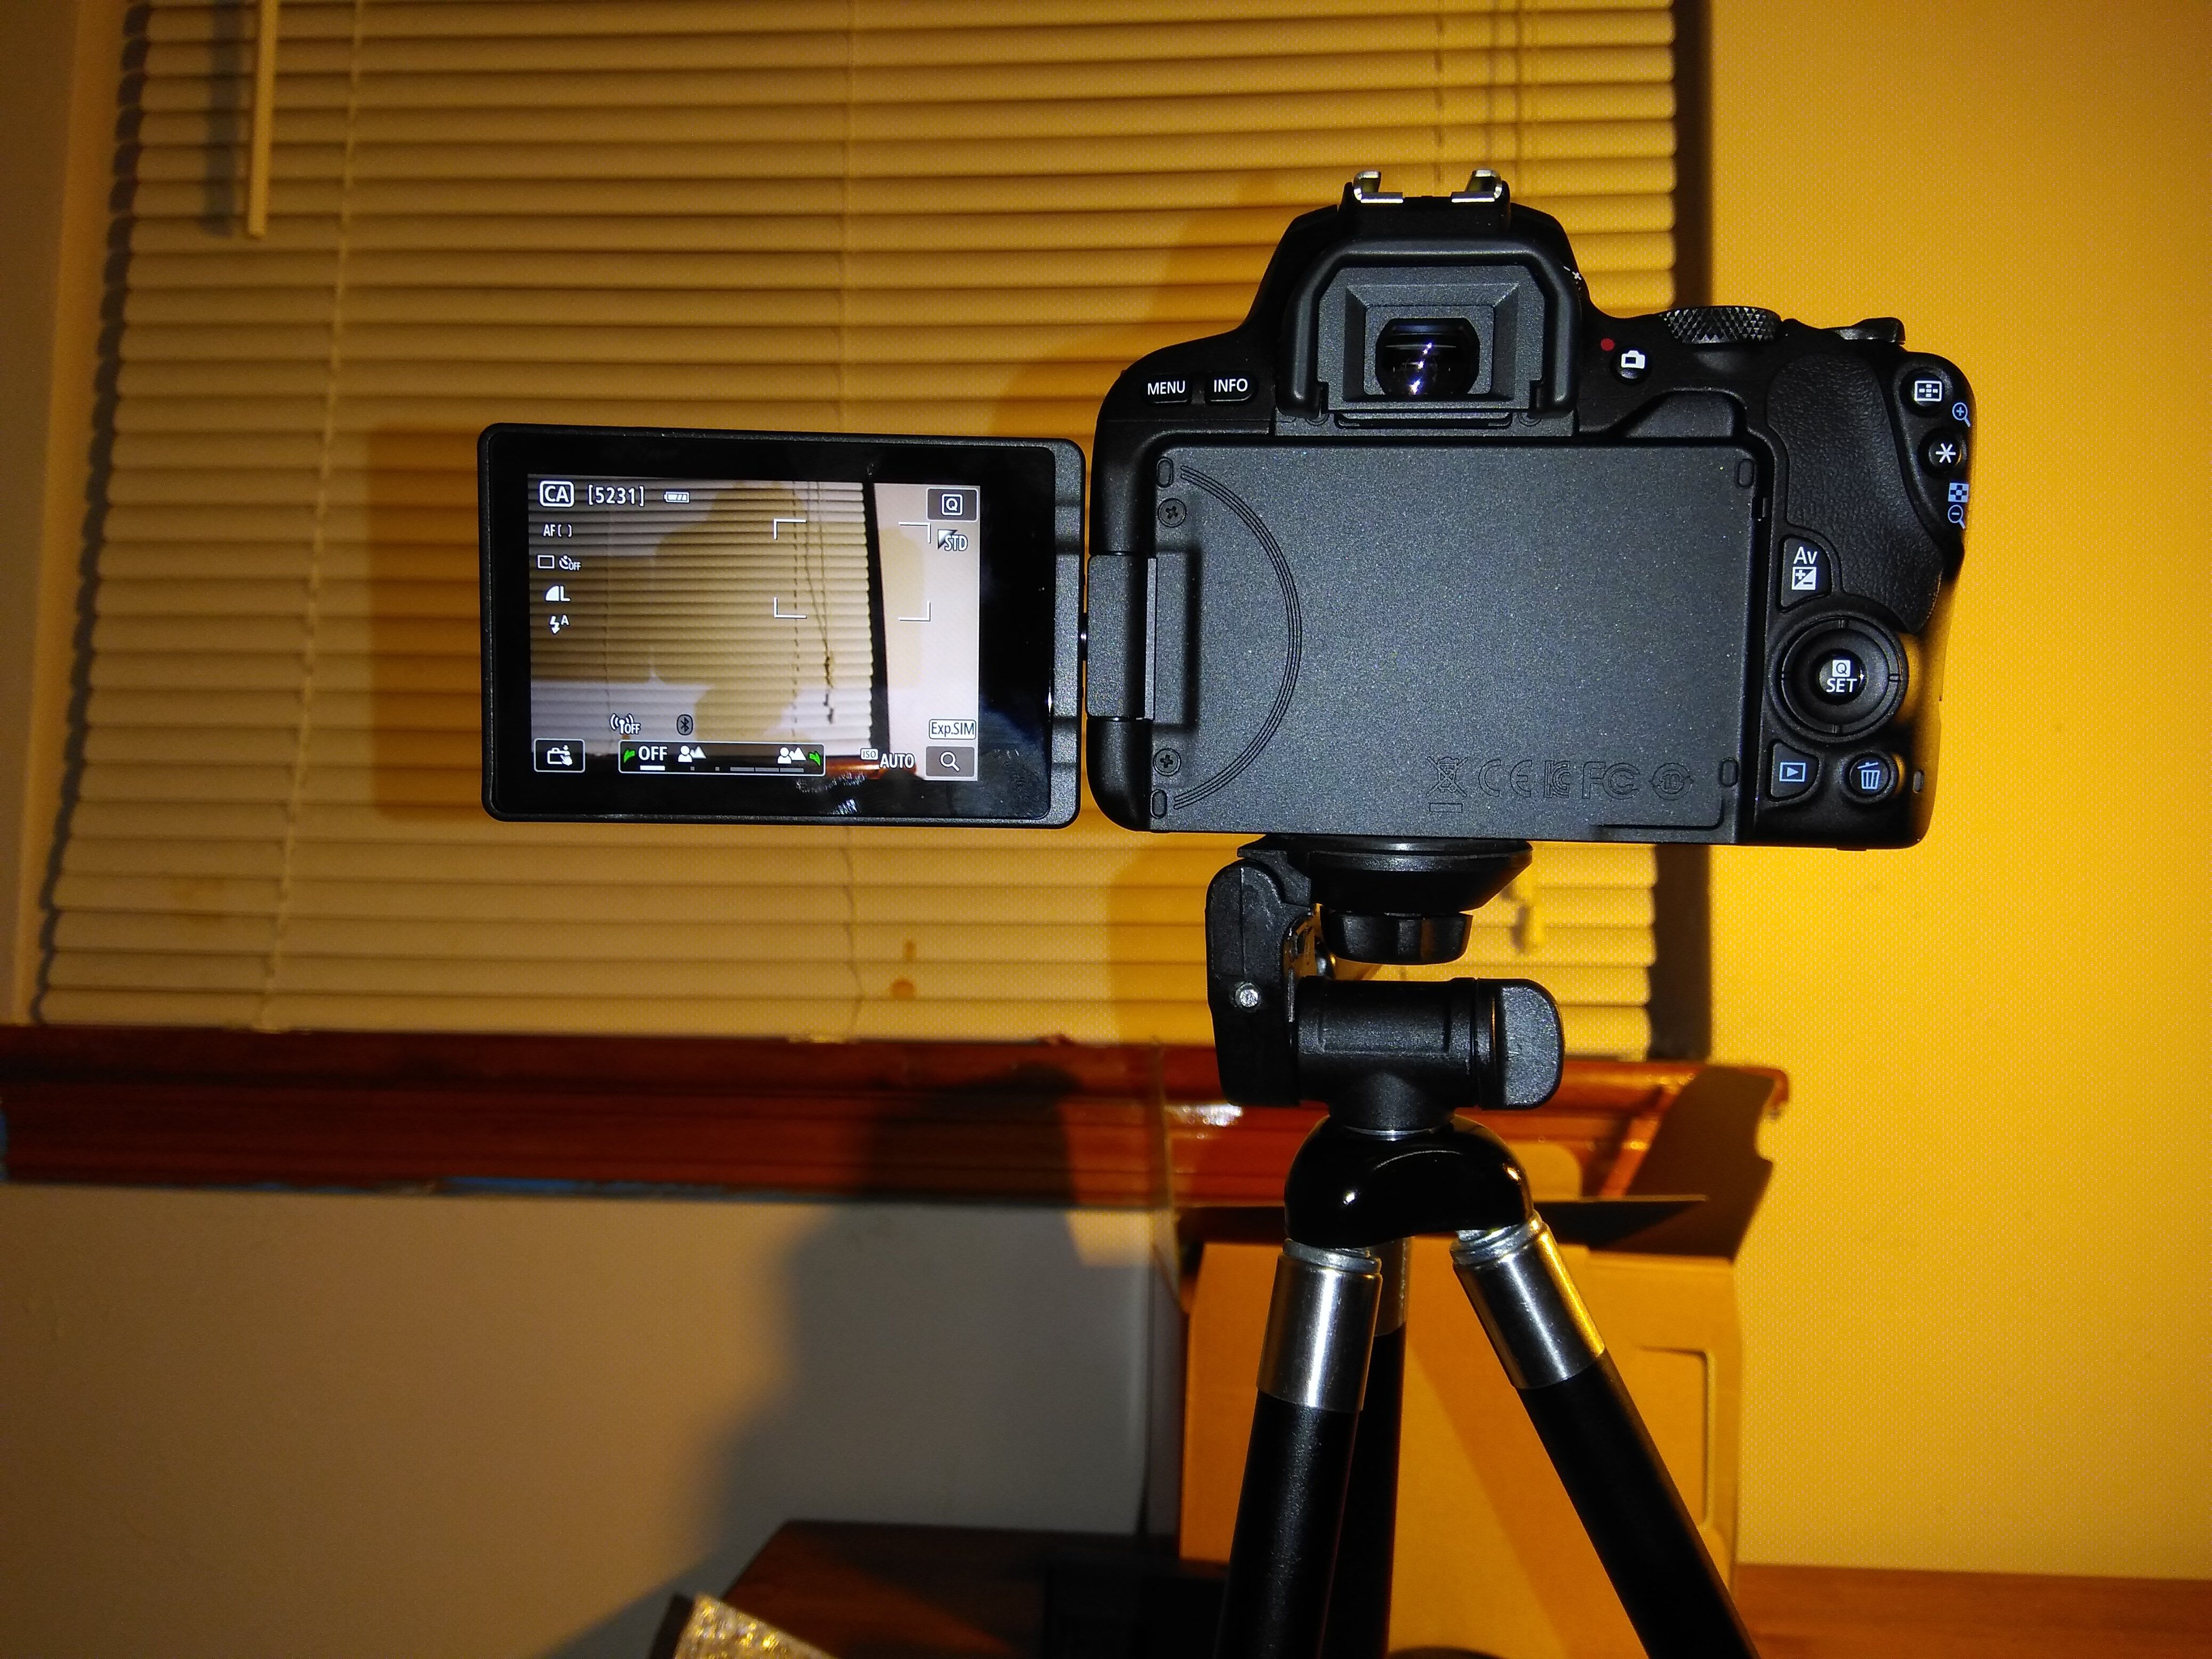 Canon EOS Rebel SL2 DSLR Camera w/ EF-S 18-55mm Lens